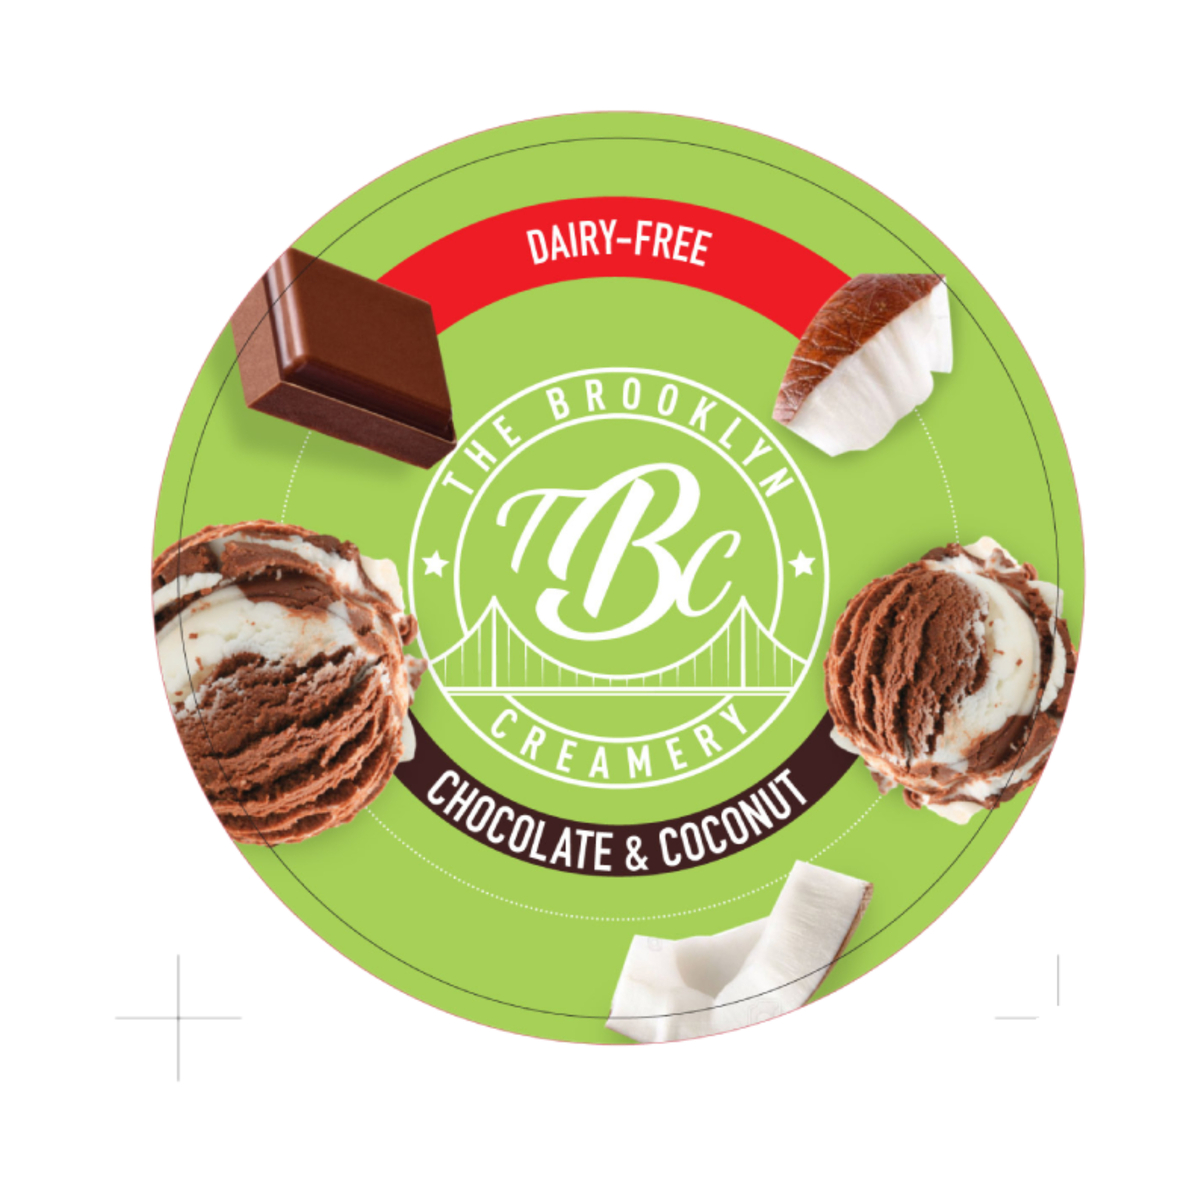 The Brooklyn Creamery Vegan Chocolate & Coconut Ice Cream 450 ml